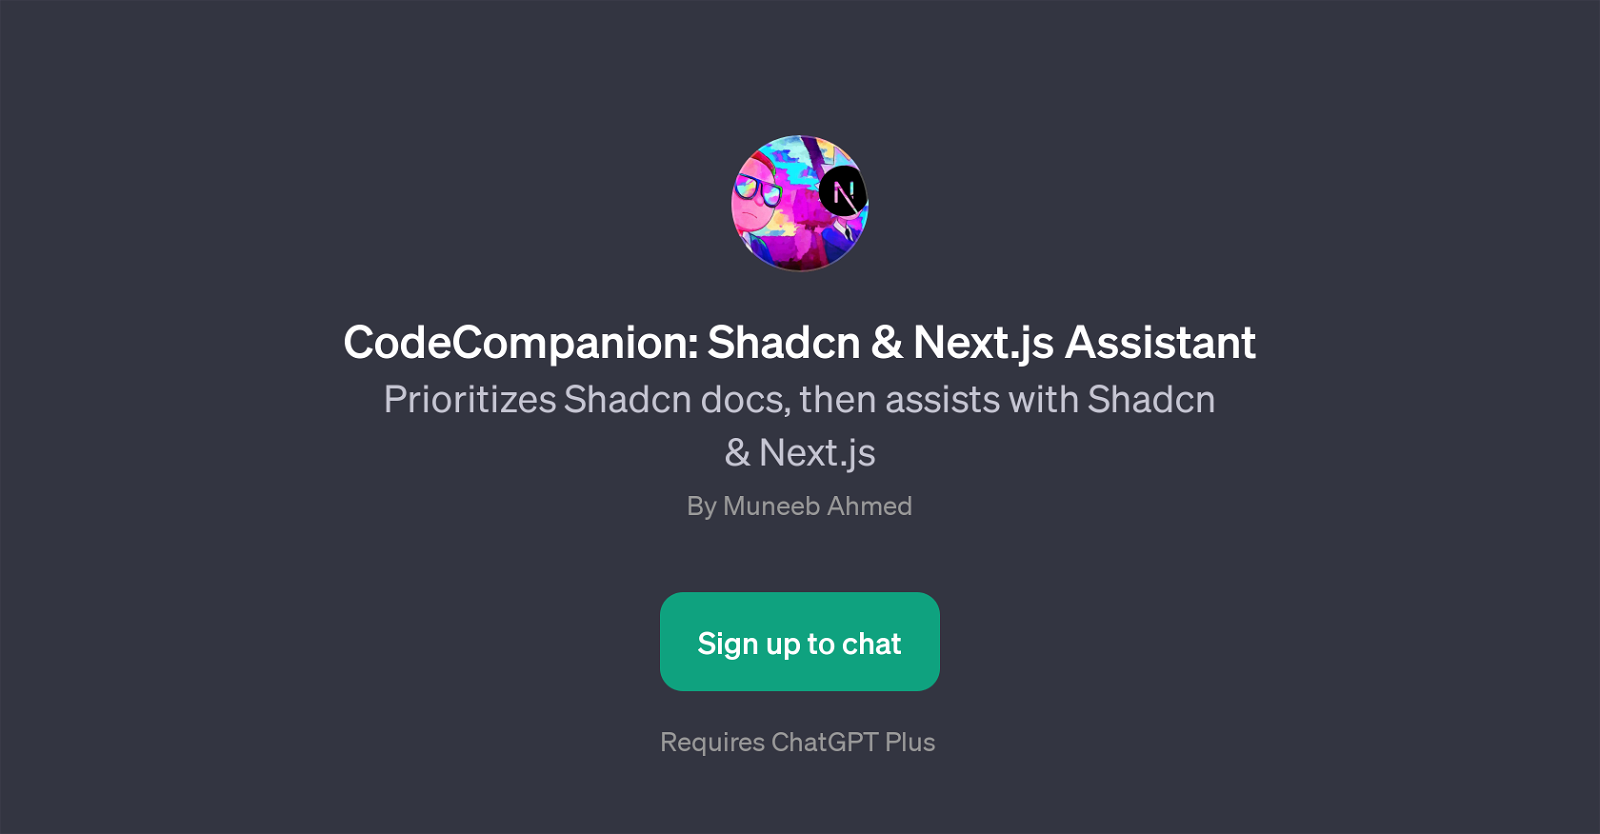 CodeCompanion: Shadcn & Next.js Assistant website